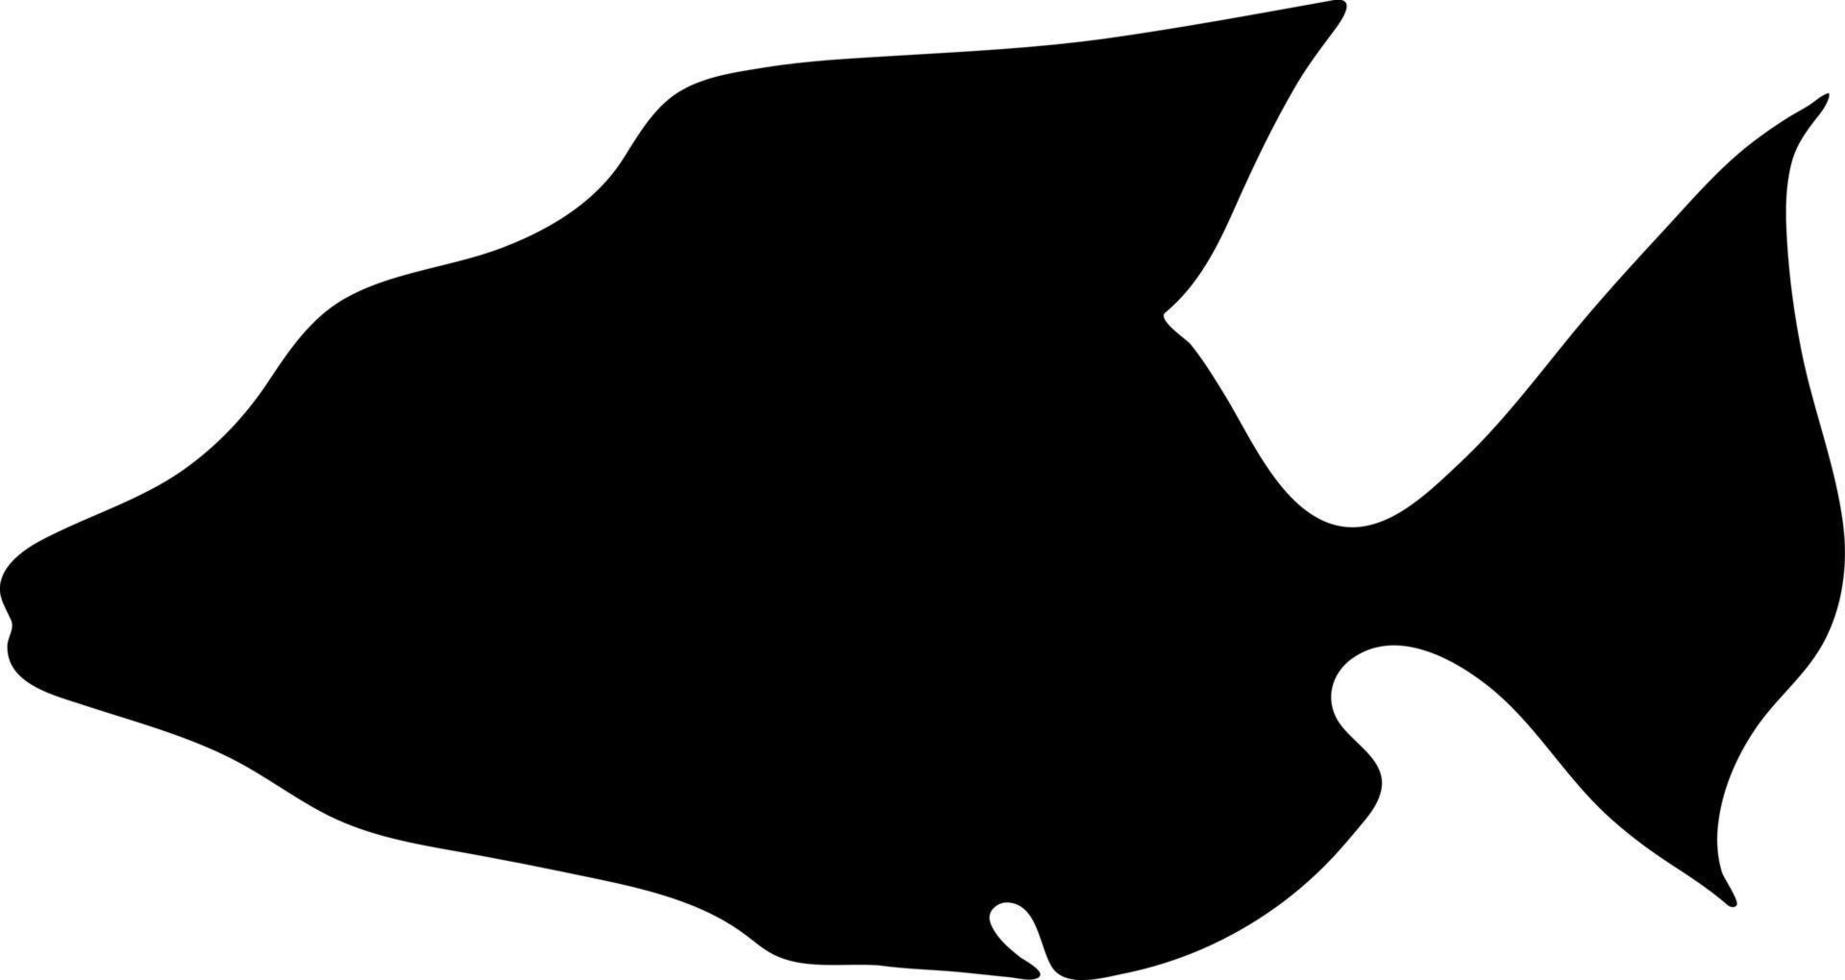 silueta negra de un pez sobre fondo blanco. imagen vectorial vector